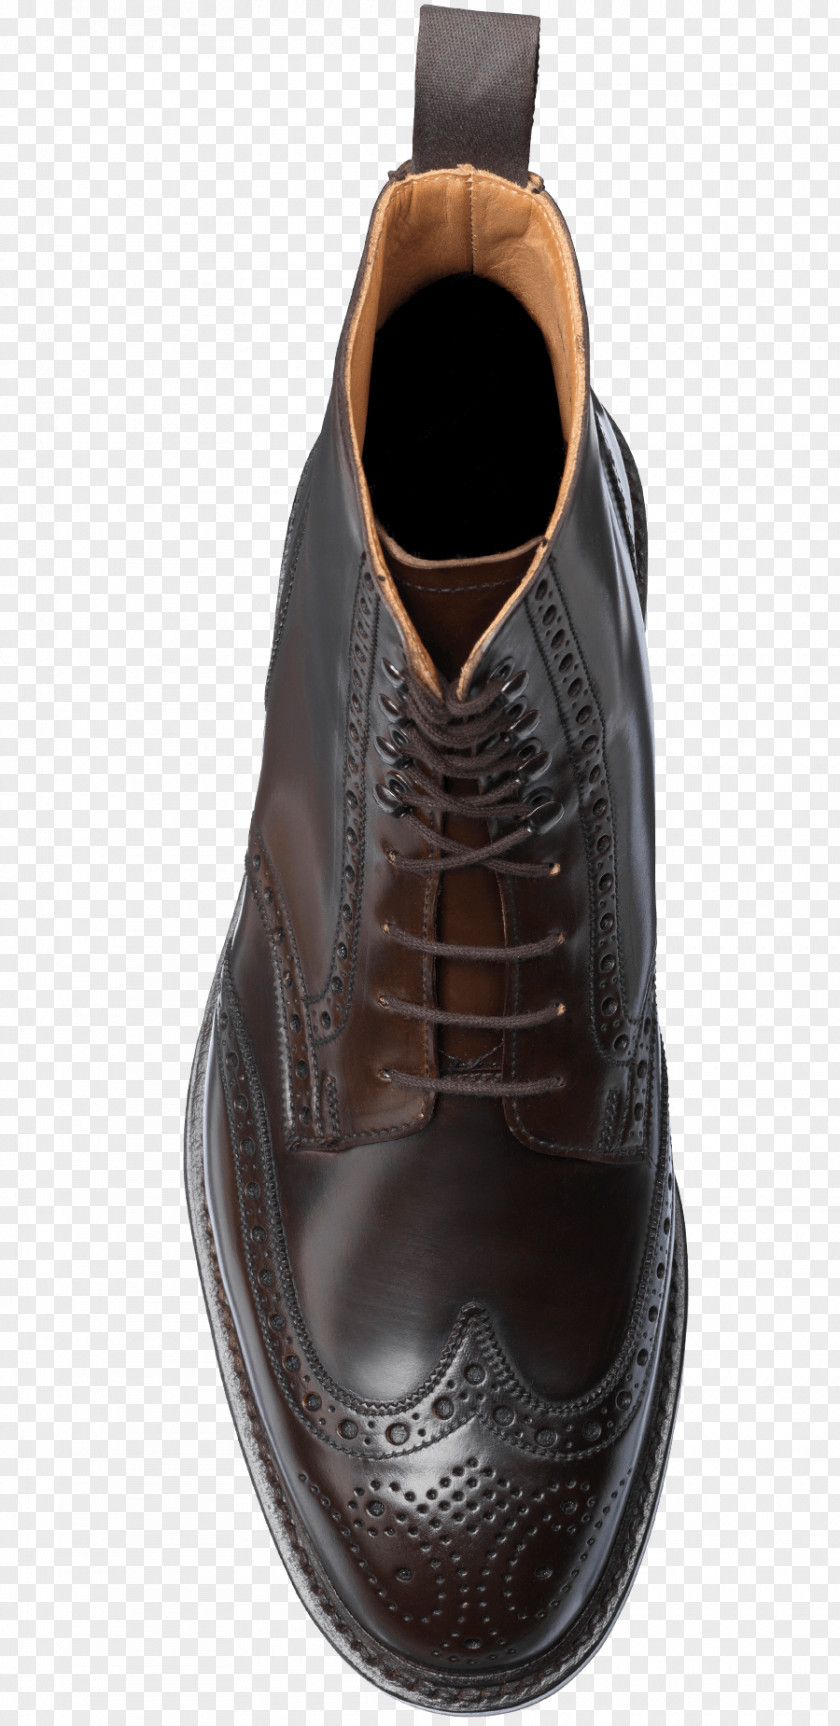 Goodyear Welt Shell Cordovan Brogue Shoe Crockett & Jones Leather PNG